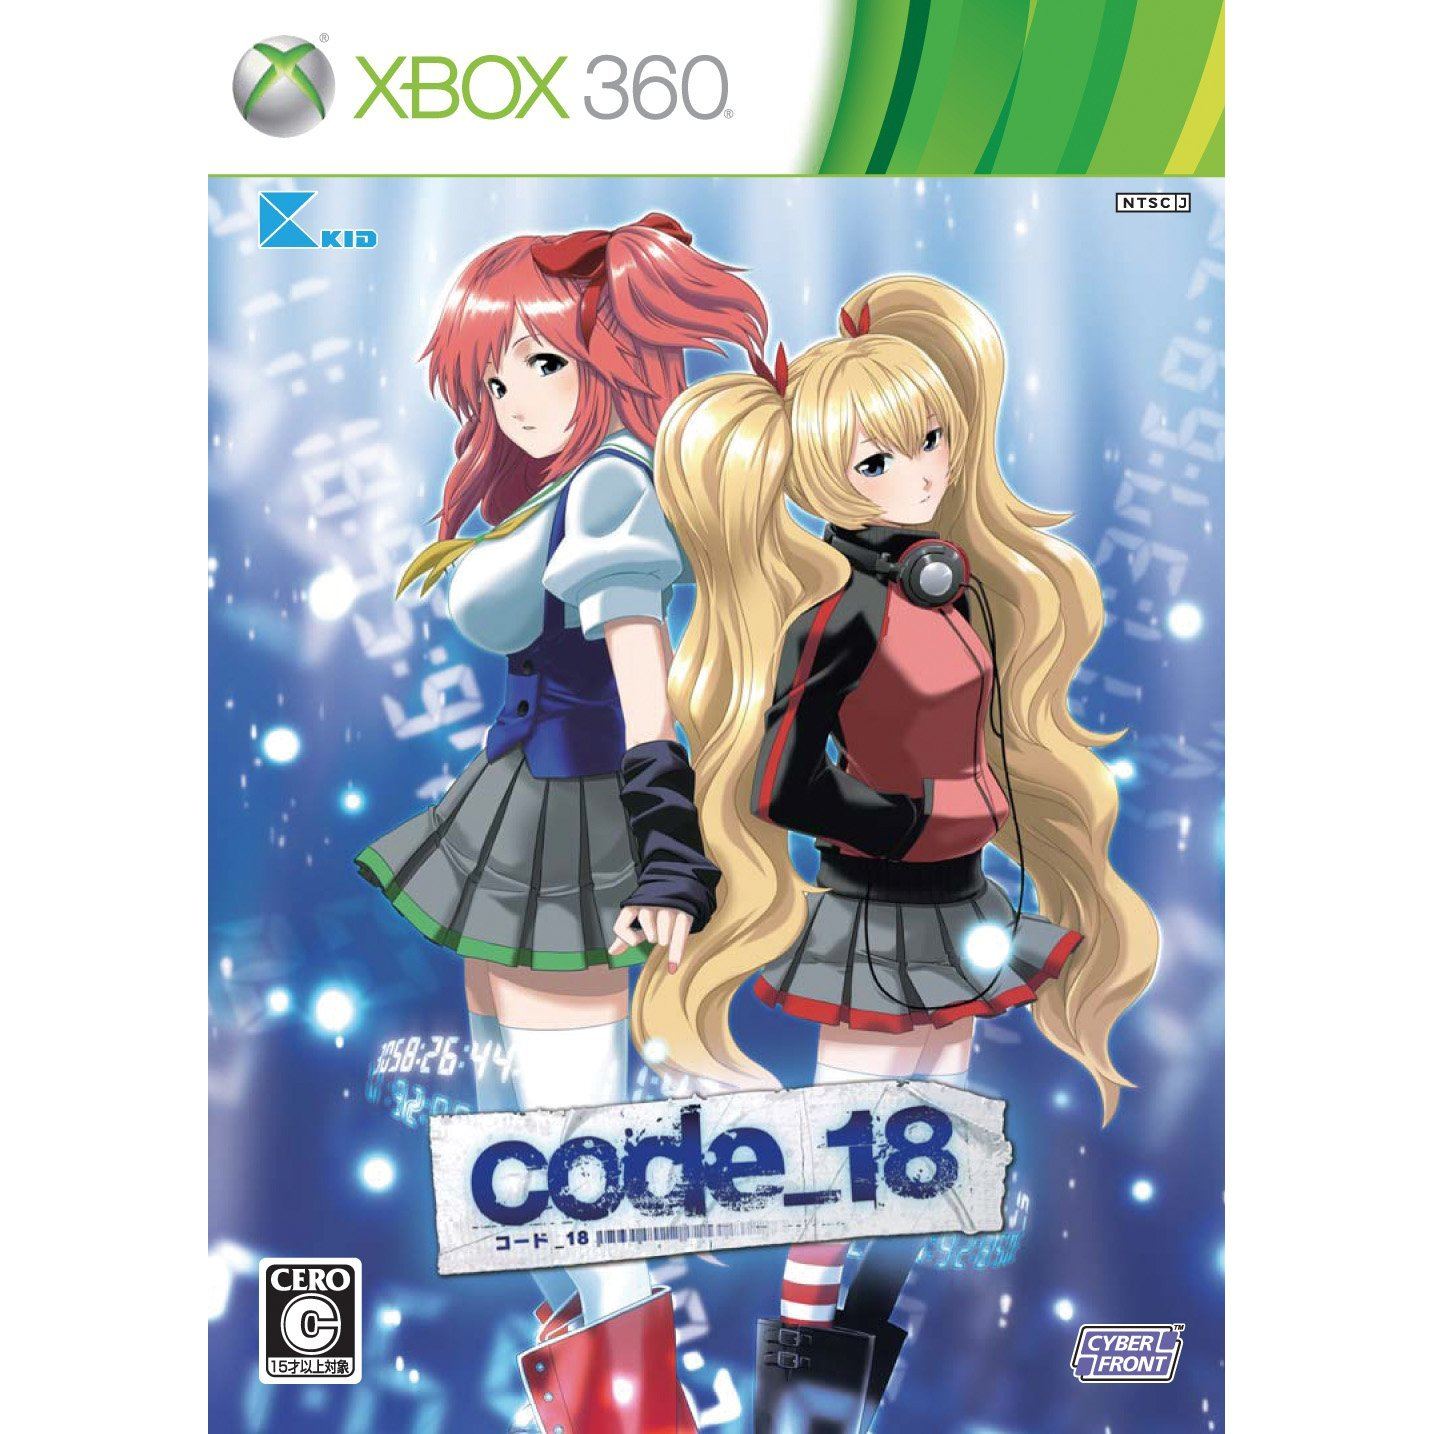  Anime Games Xbox 360